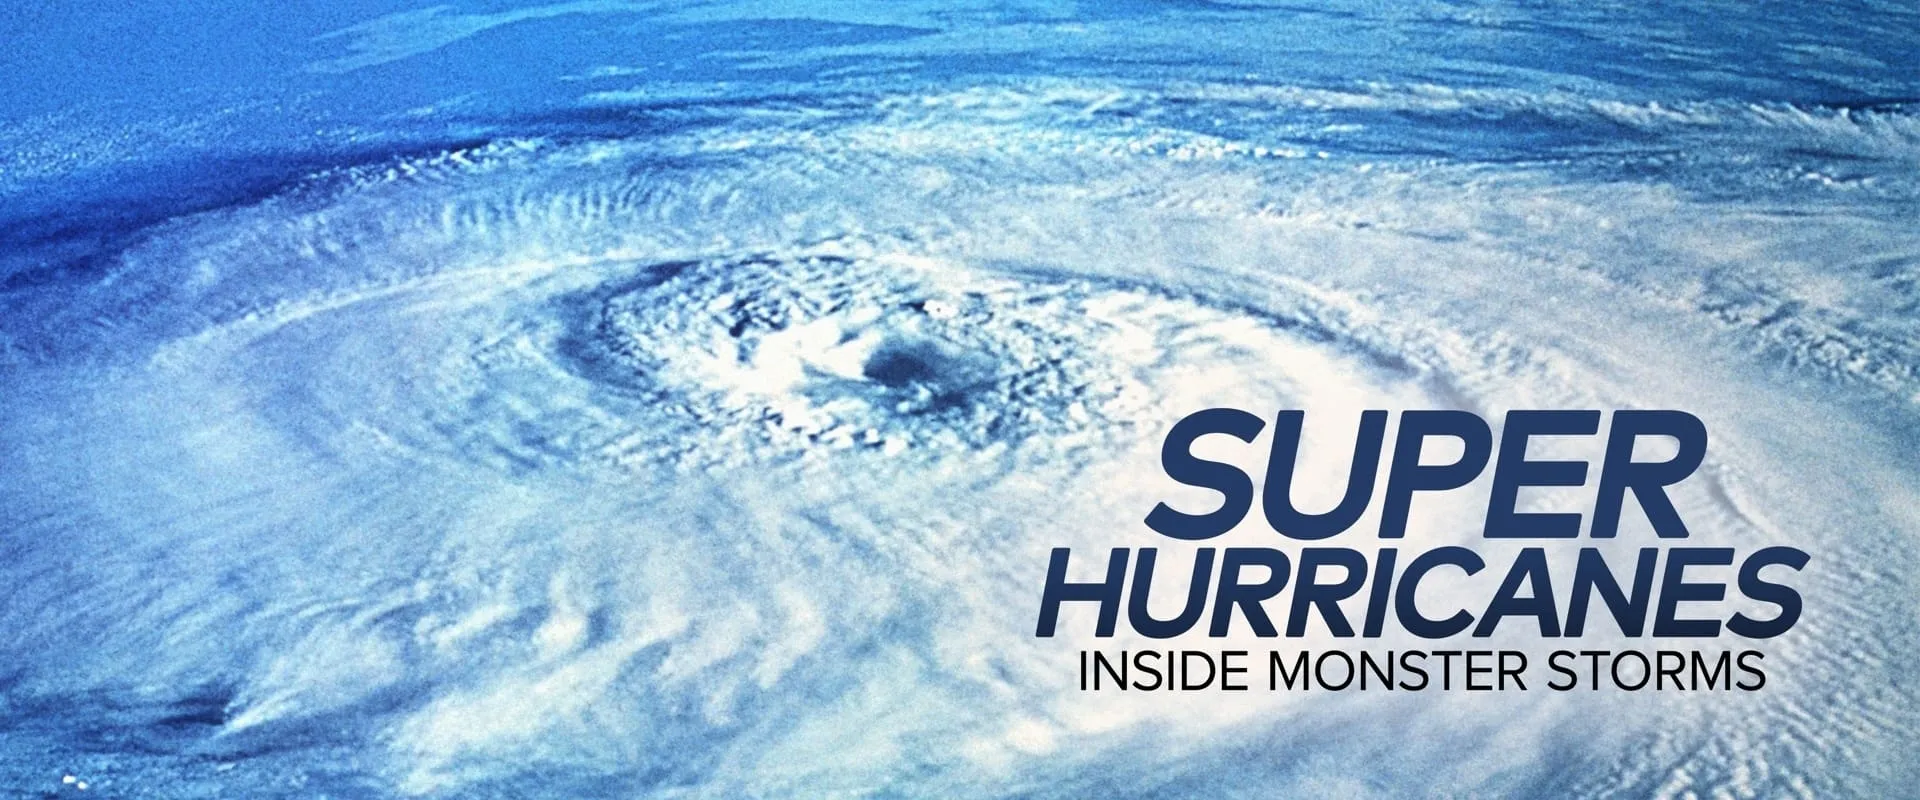 Super Hurricanes: Inside Monster Storms (2016)